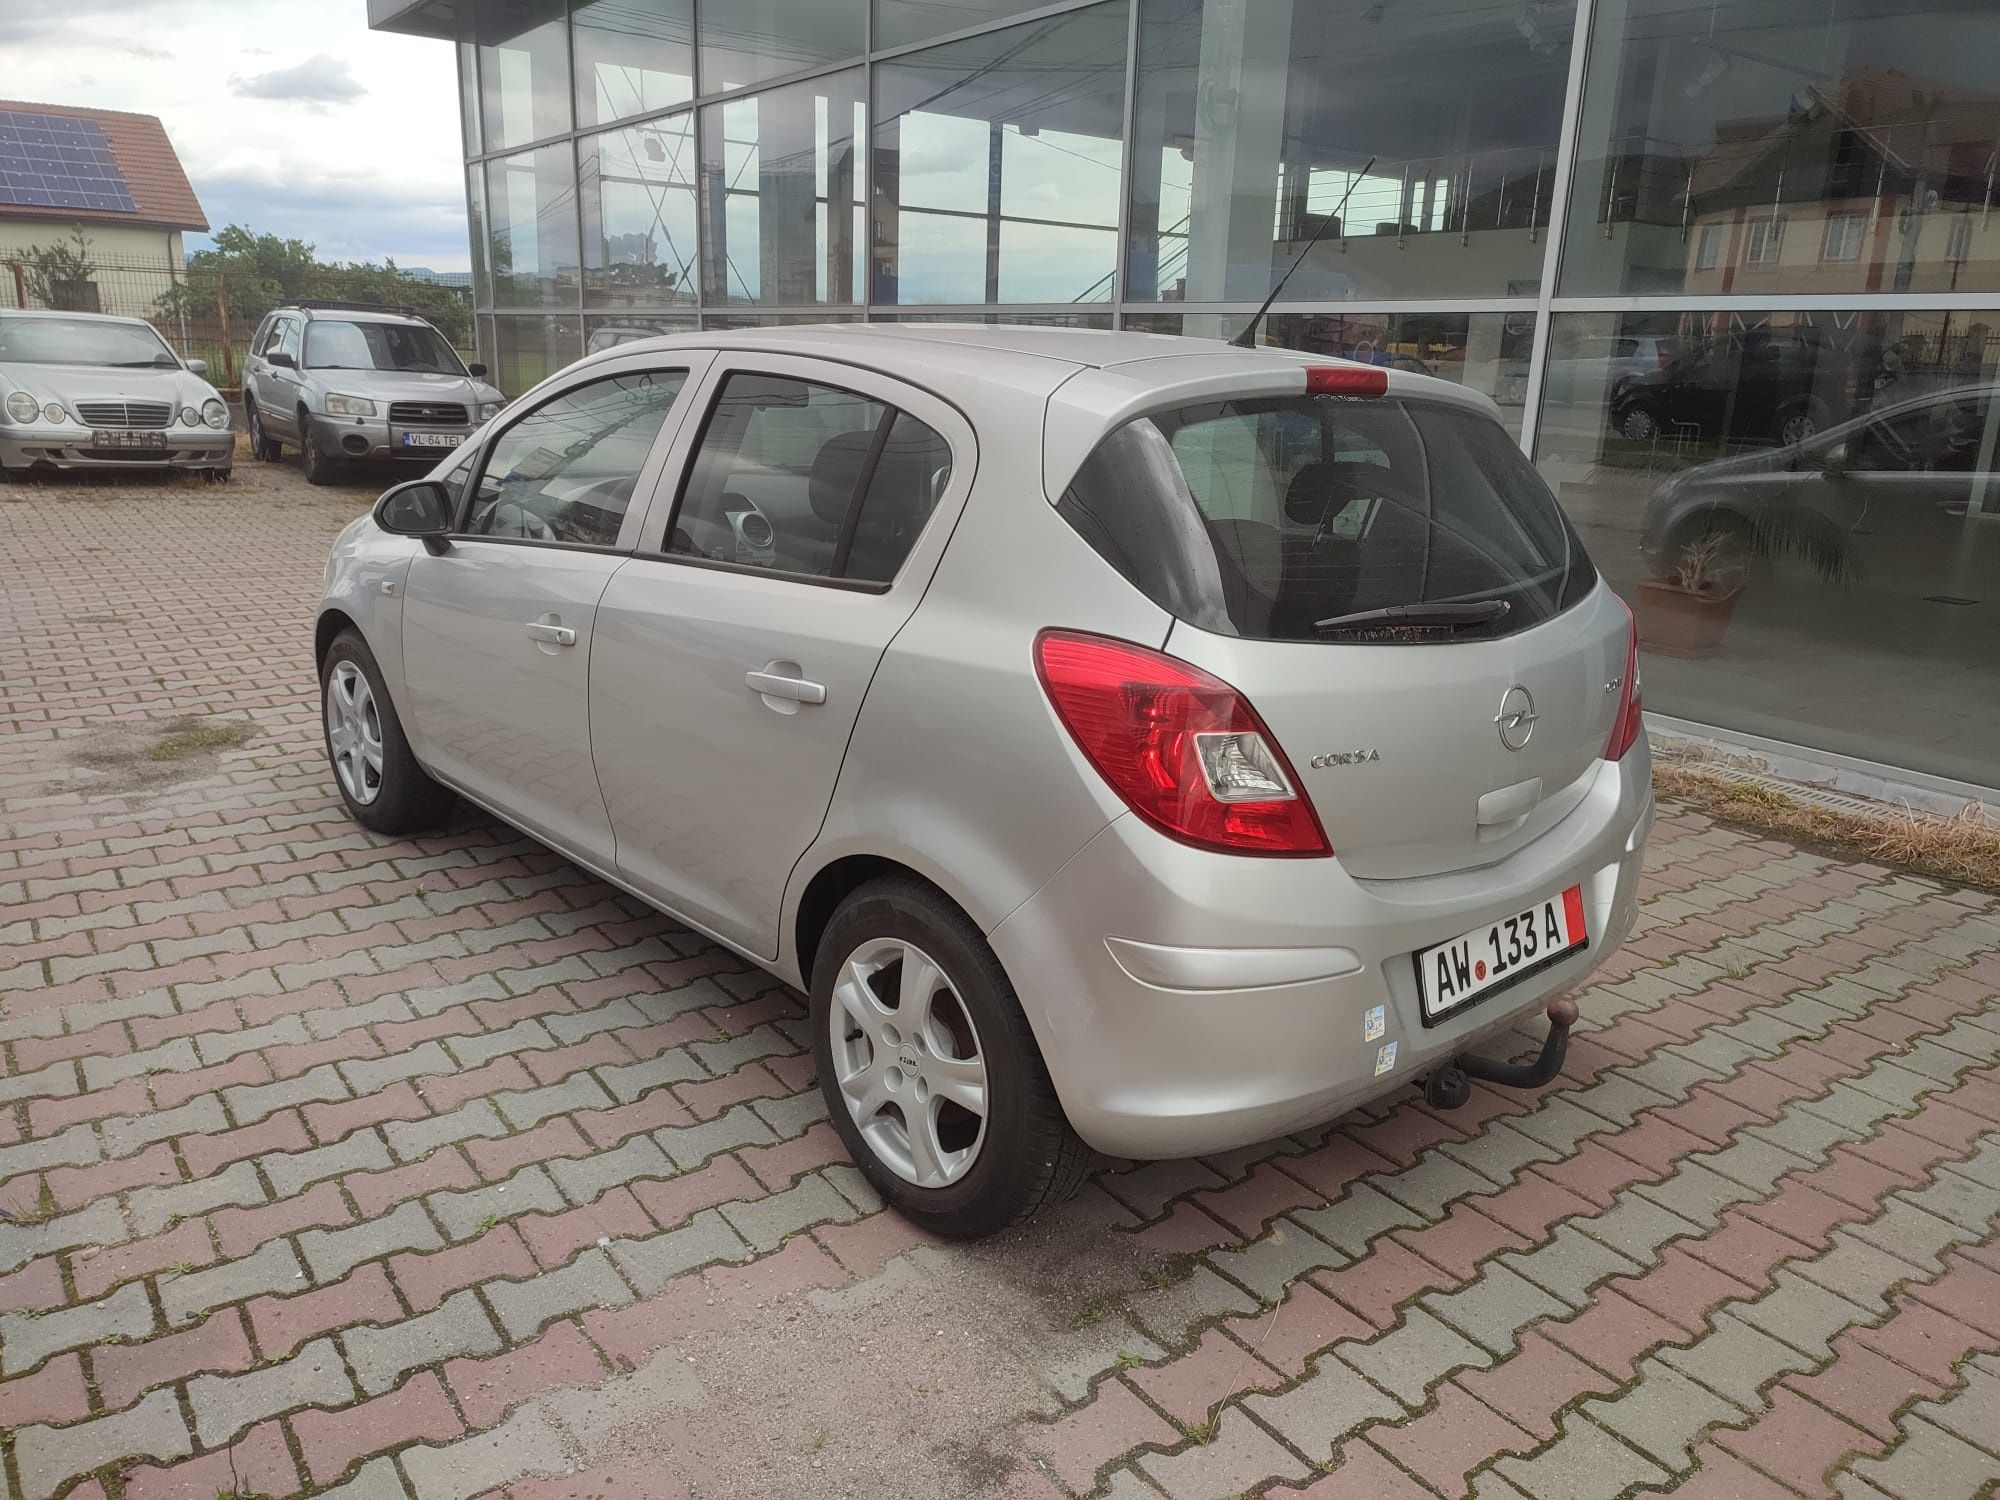 Opel CORSA 1,3 Cdti